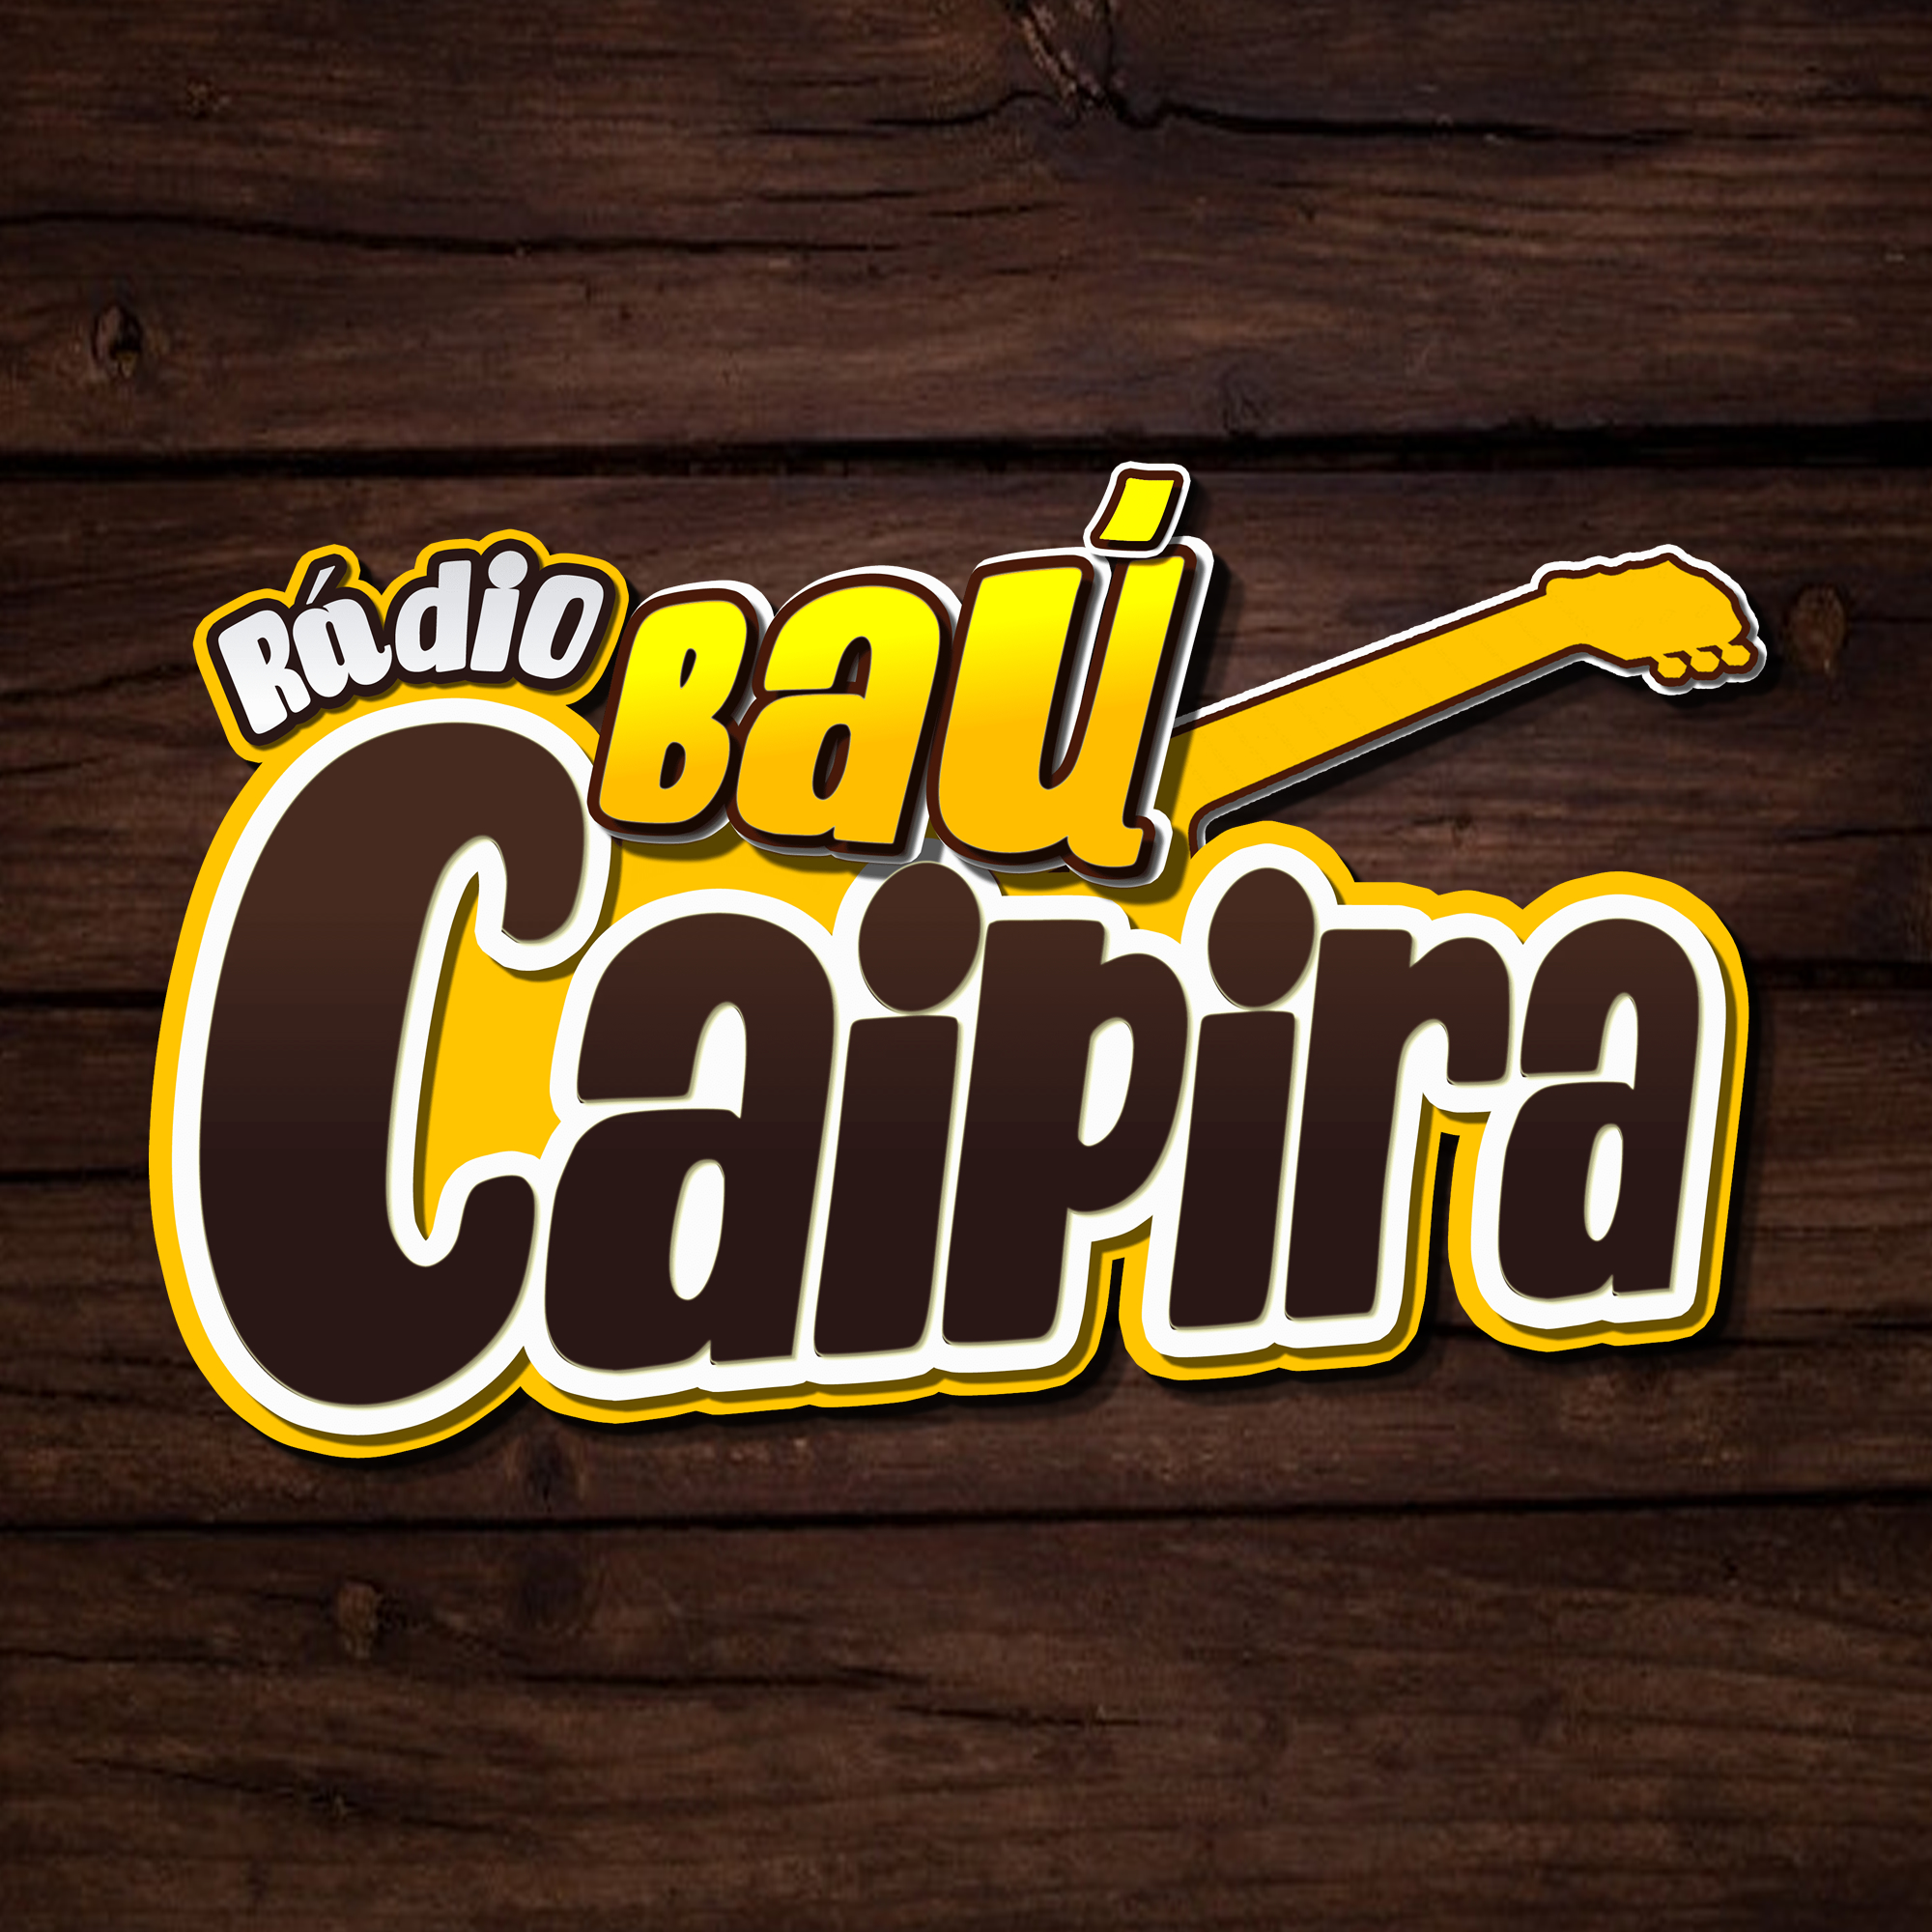 Rádio Baú Caipira